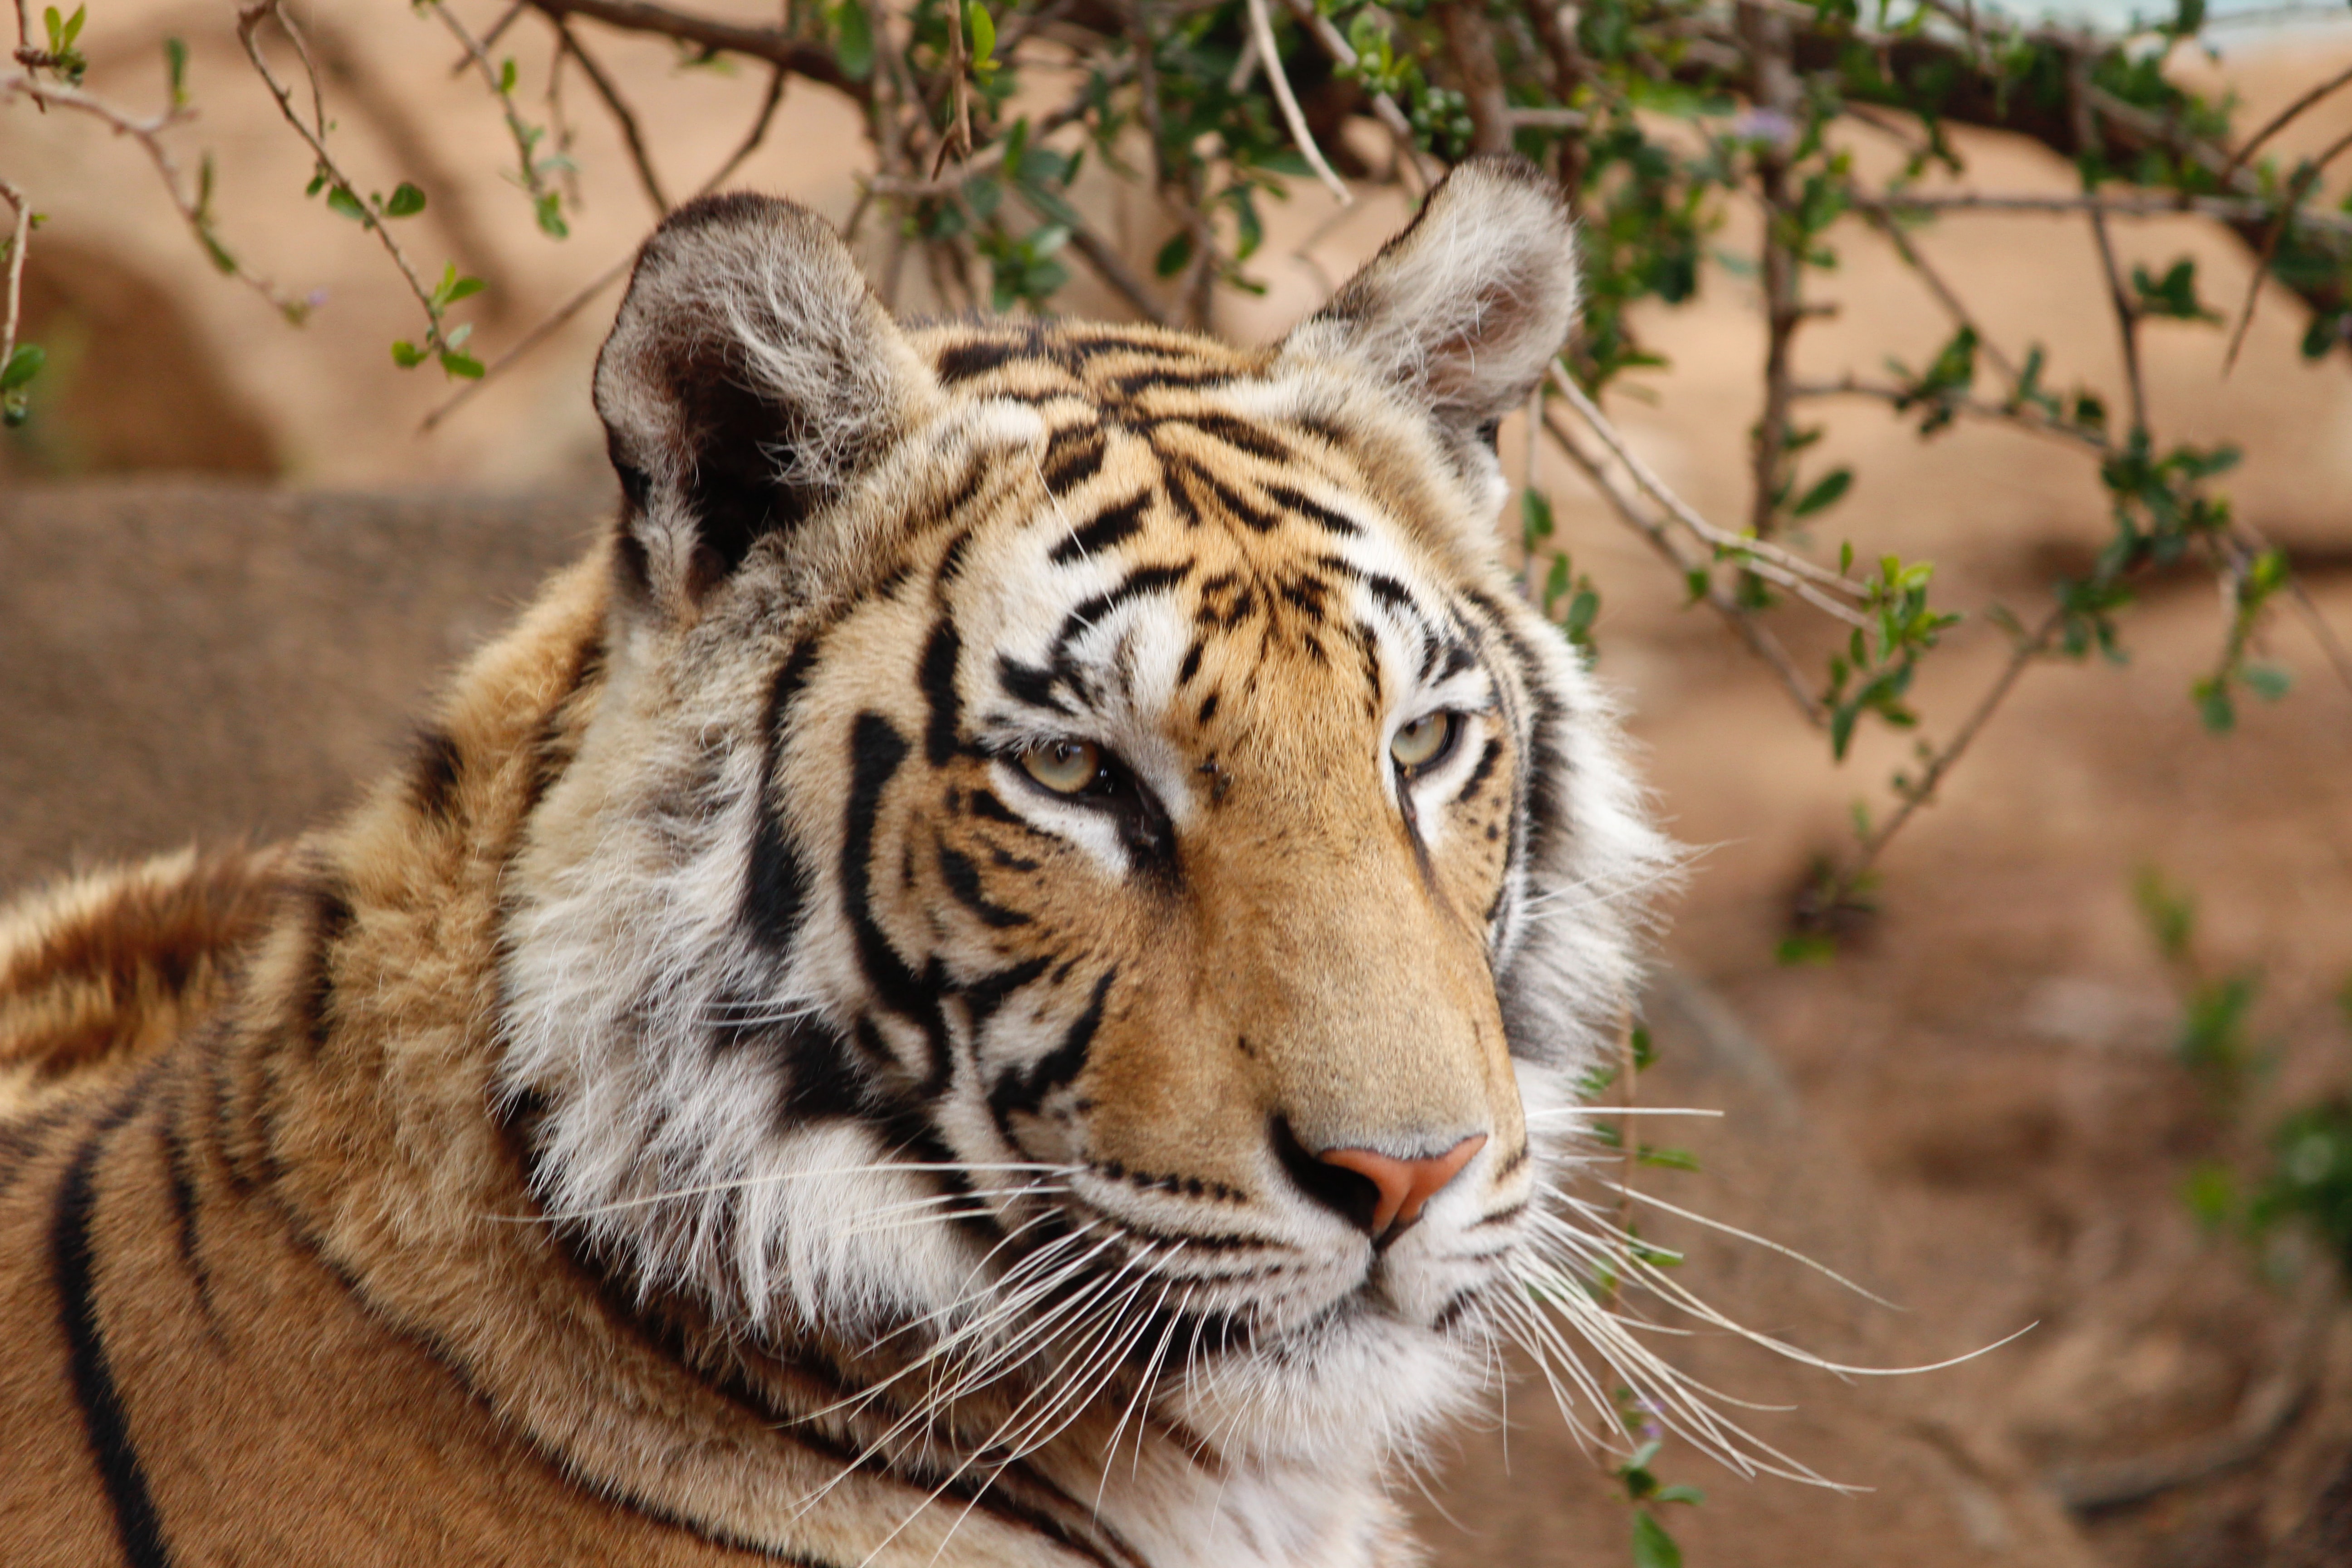 Amur tiger. Photo by Lena Bauermeister on Unsplash